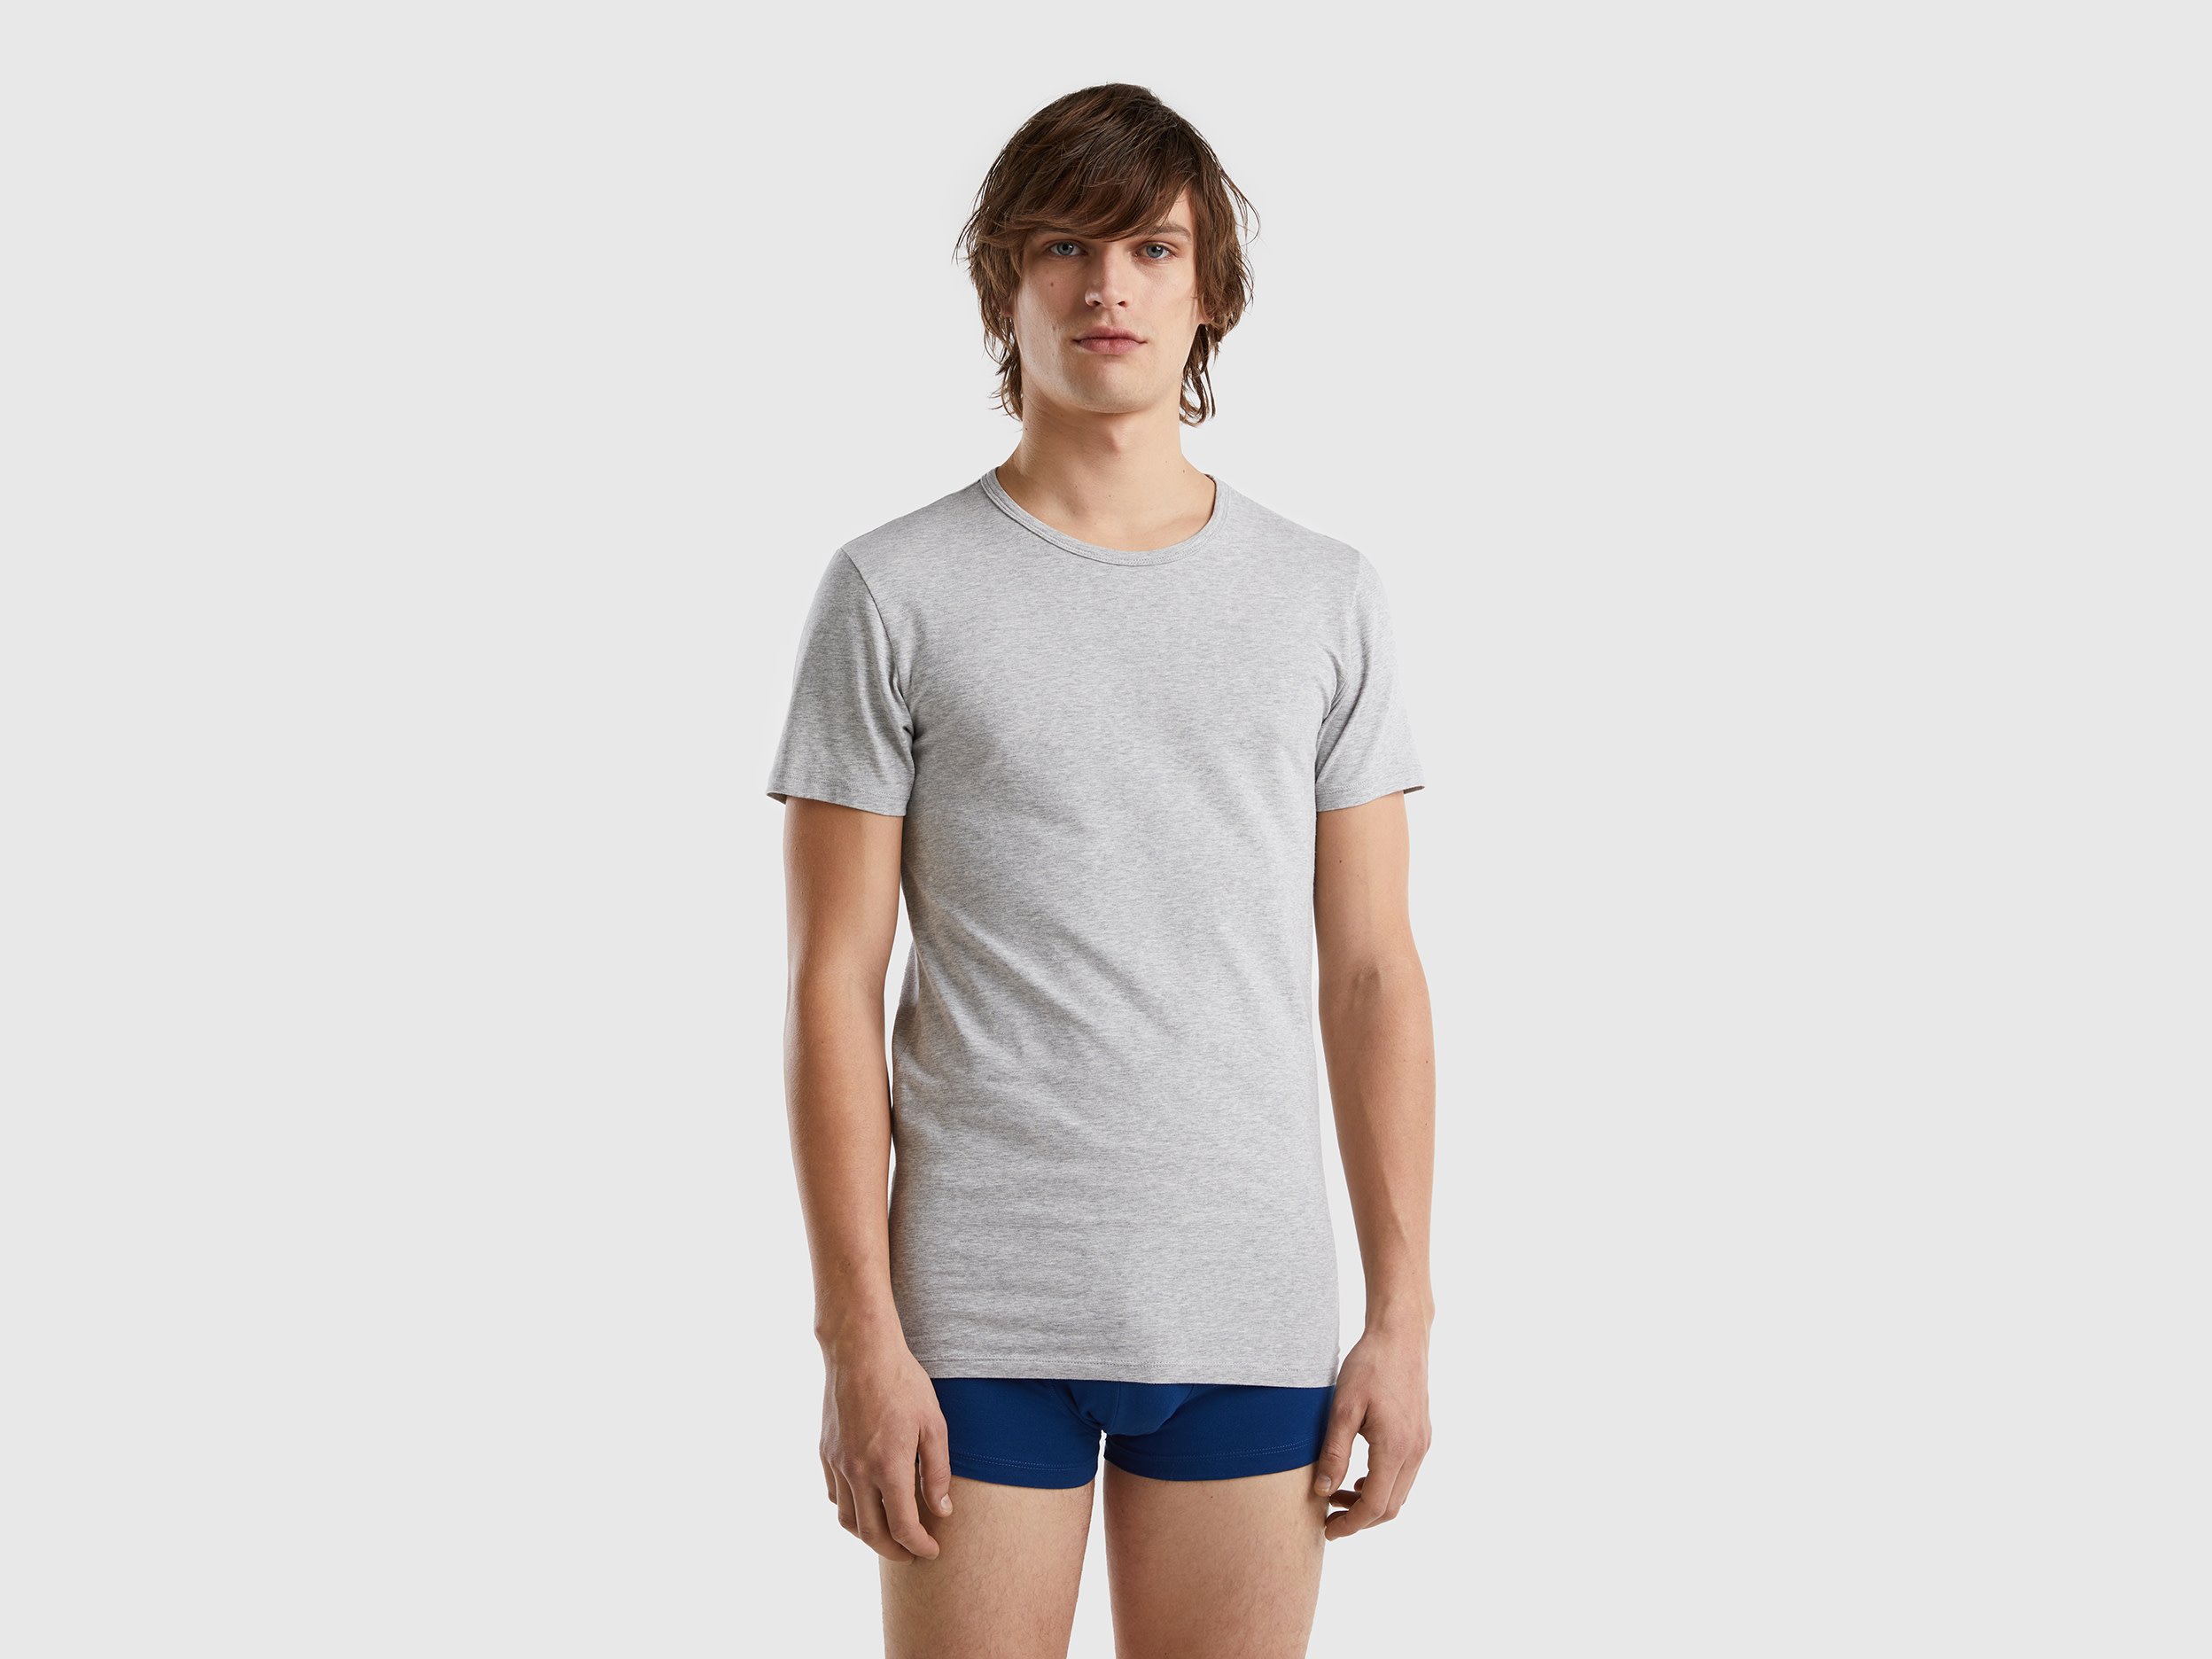 Image of Benetton, Organic Stretch Cotton T-shirt, size L, Light Gray, Men